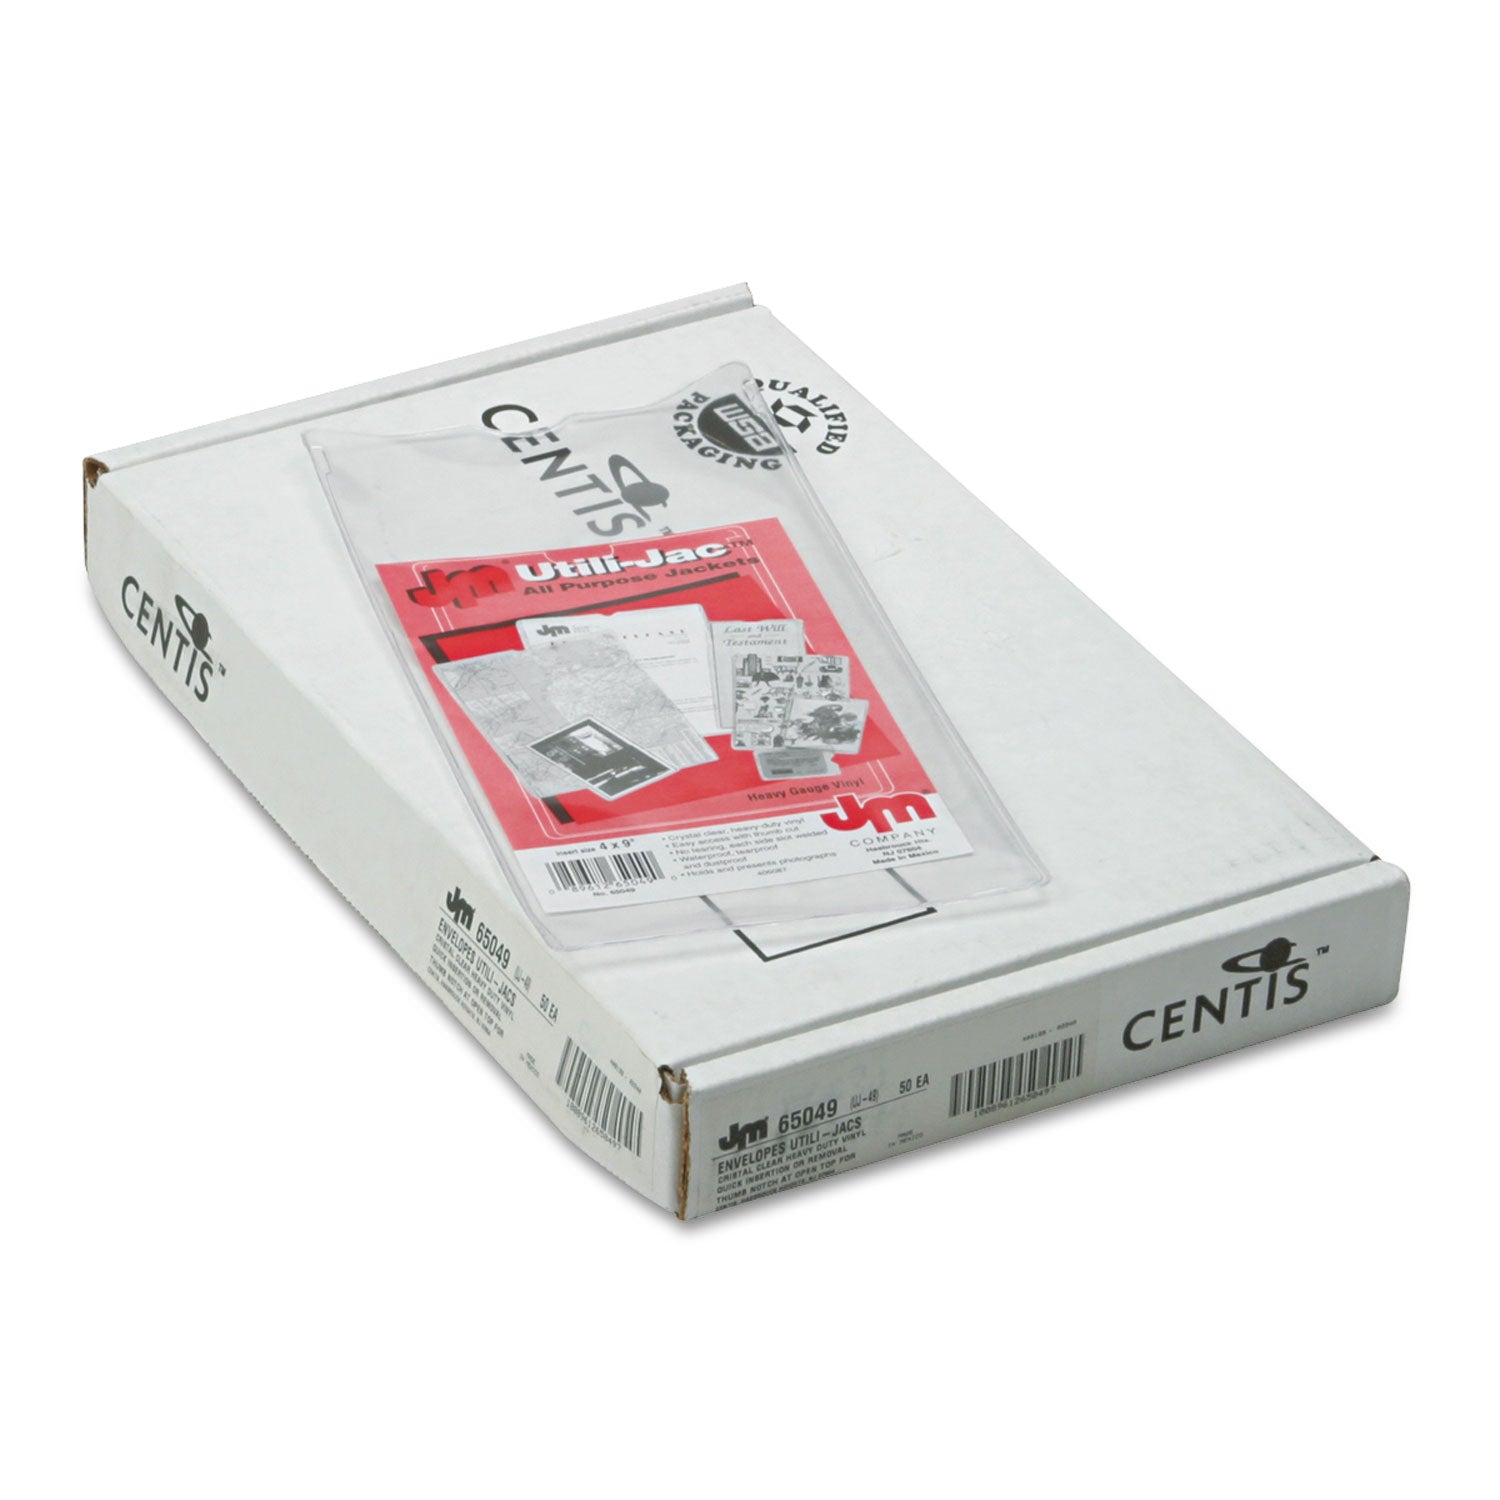 Utili-Jac Heavy-Duty Clear Plastic Envelopes, 4 x 9, 50/Box - 